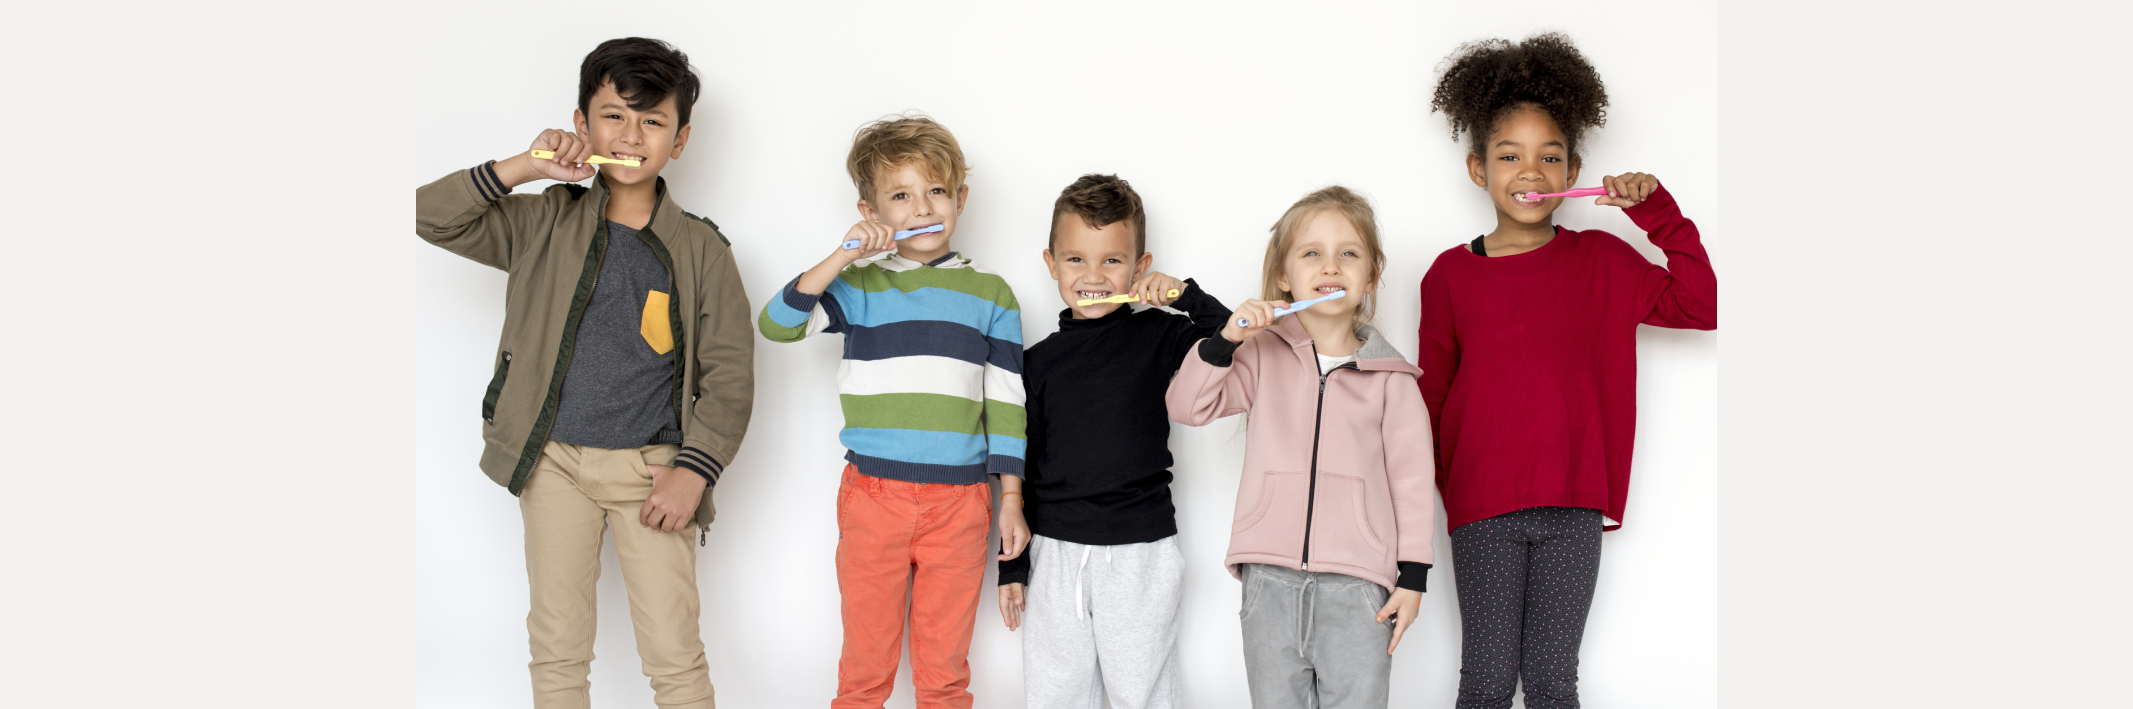 Fluoride and Children's Teeth